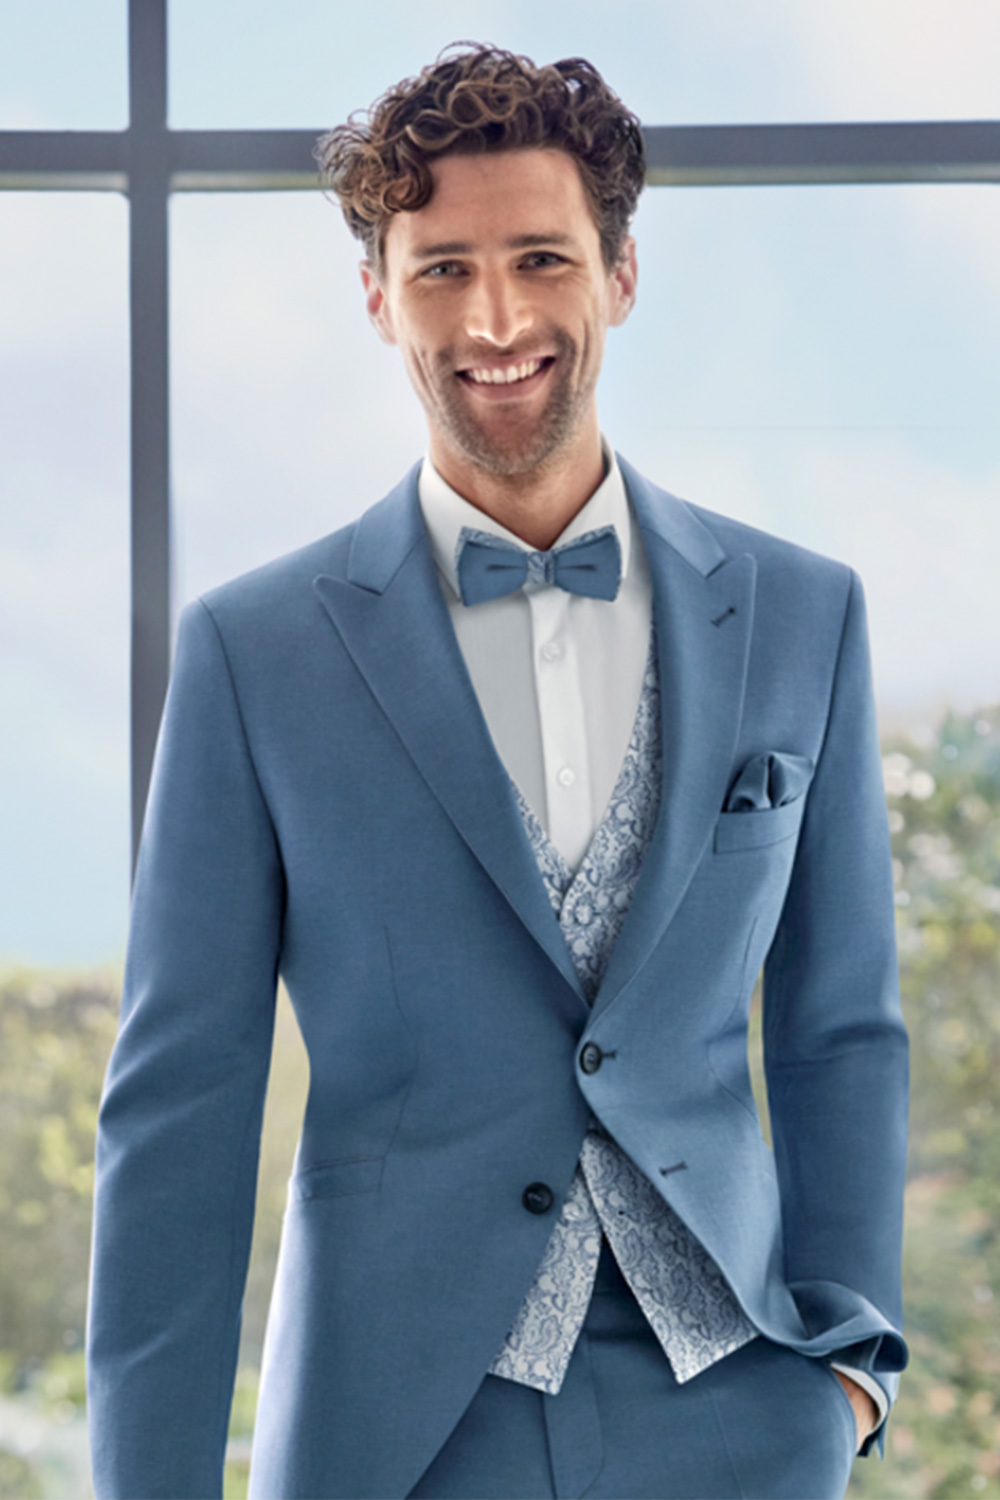 Buy Trulyfeb Light Blue Waistcoat  Trouser Suit for Mens 34 at Amazonin